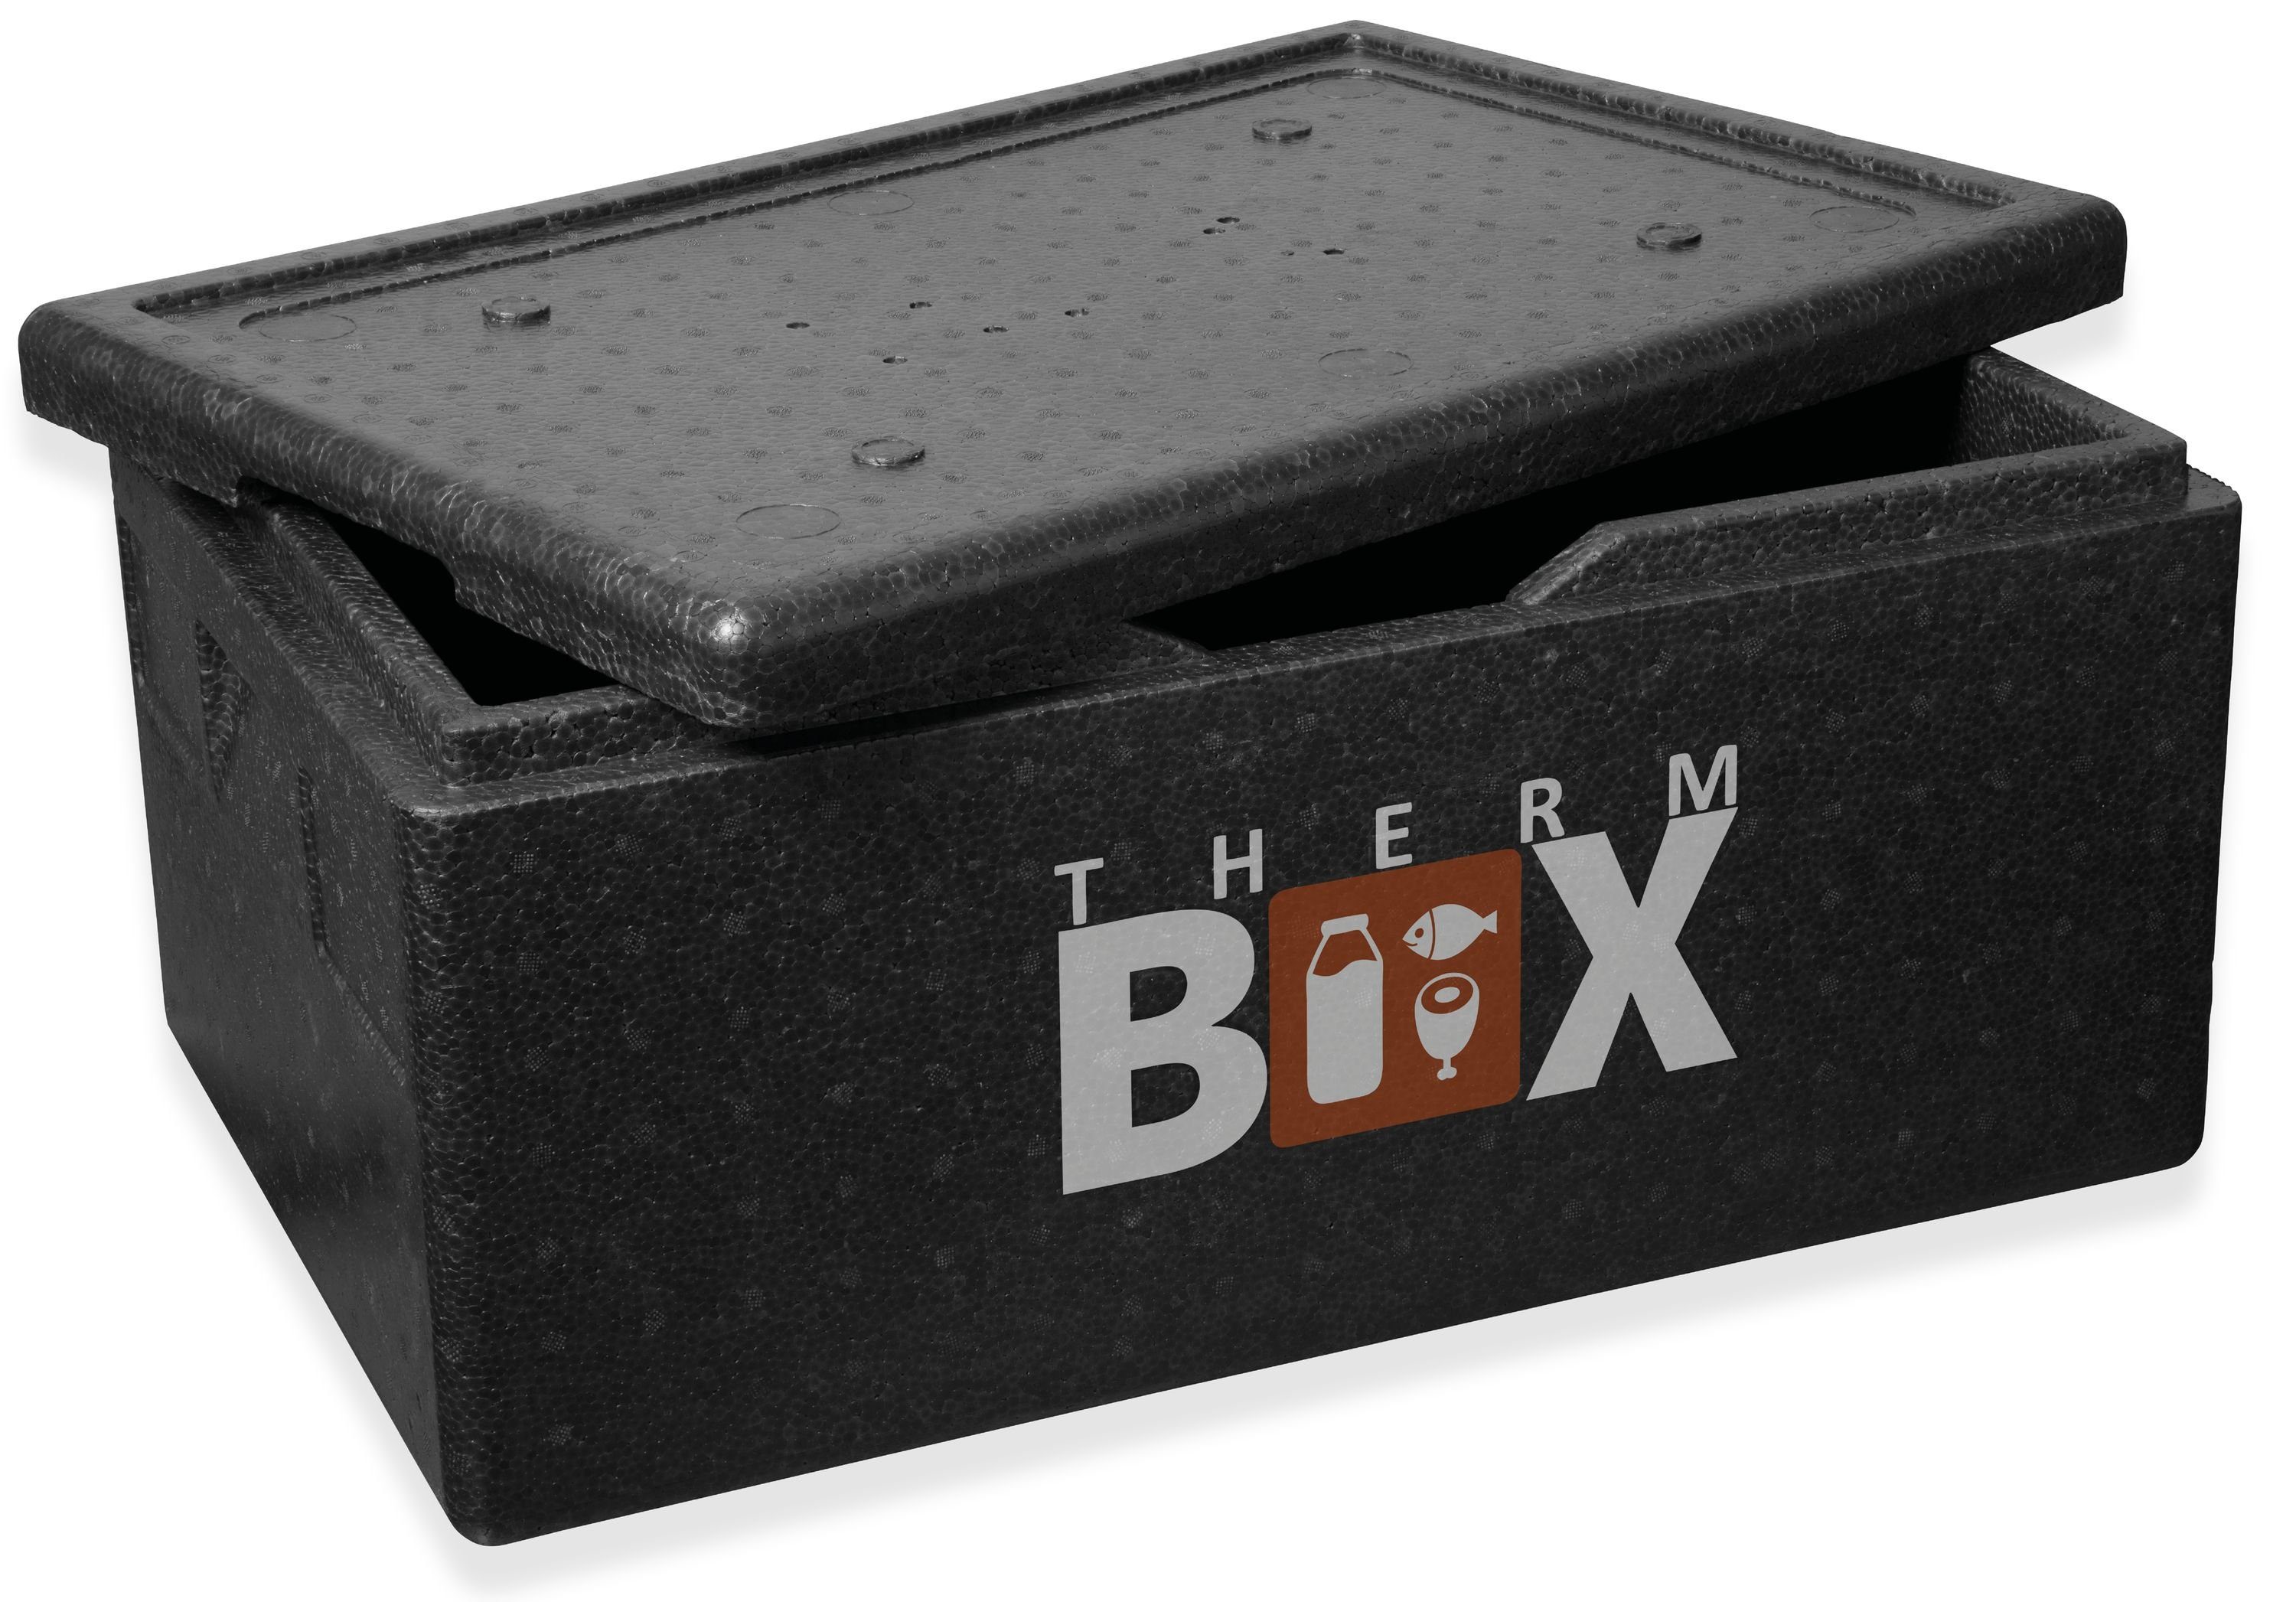 THERM-BOX Thermobehälter Profibox Gastro GN 40L Innenmaß: 53,9x34x21,9cm Wiederverwendbar, Styropor-Piocelan, (1, 0-tlg., Box mit Deckel im Karton), Isolierbox Thermobox Kühlbox Warmhaltebox Styroporbox